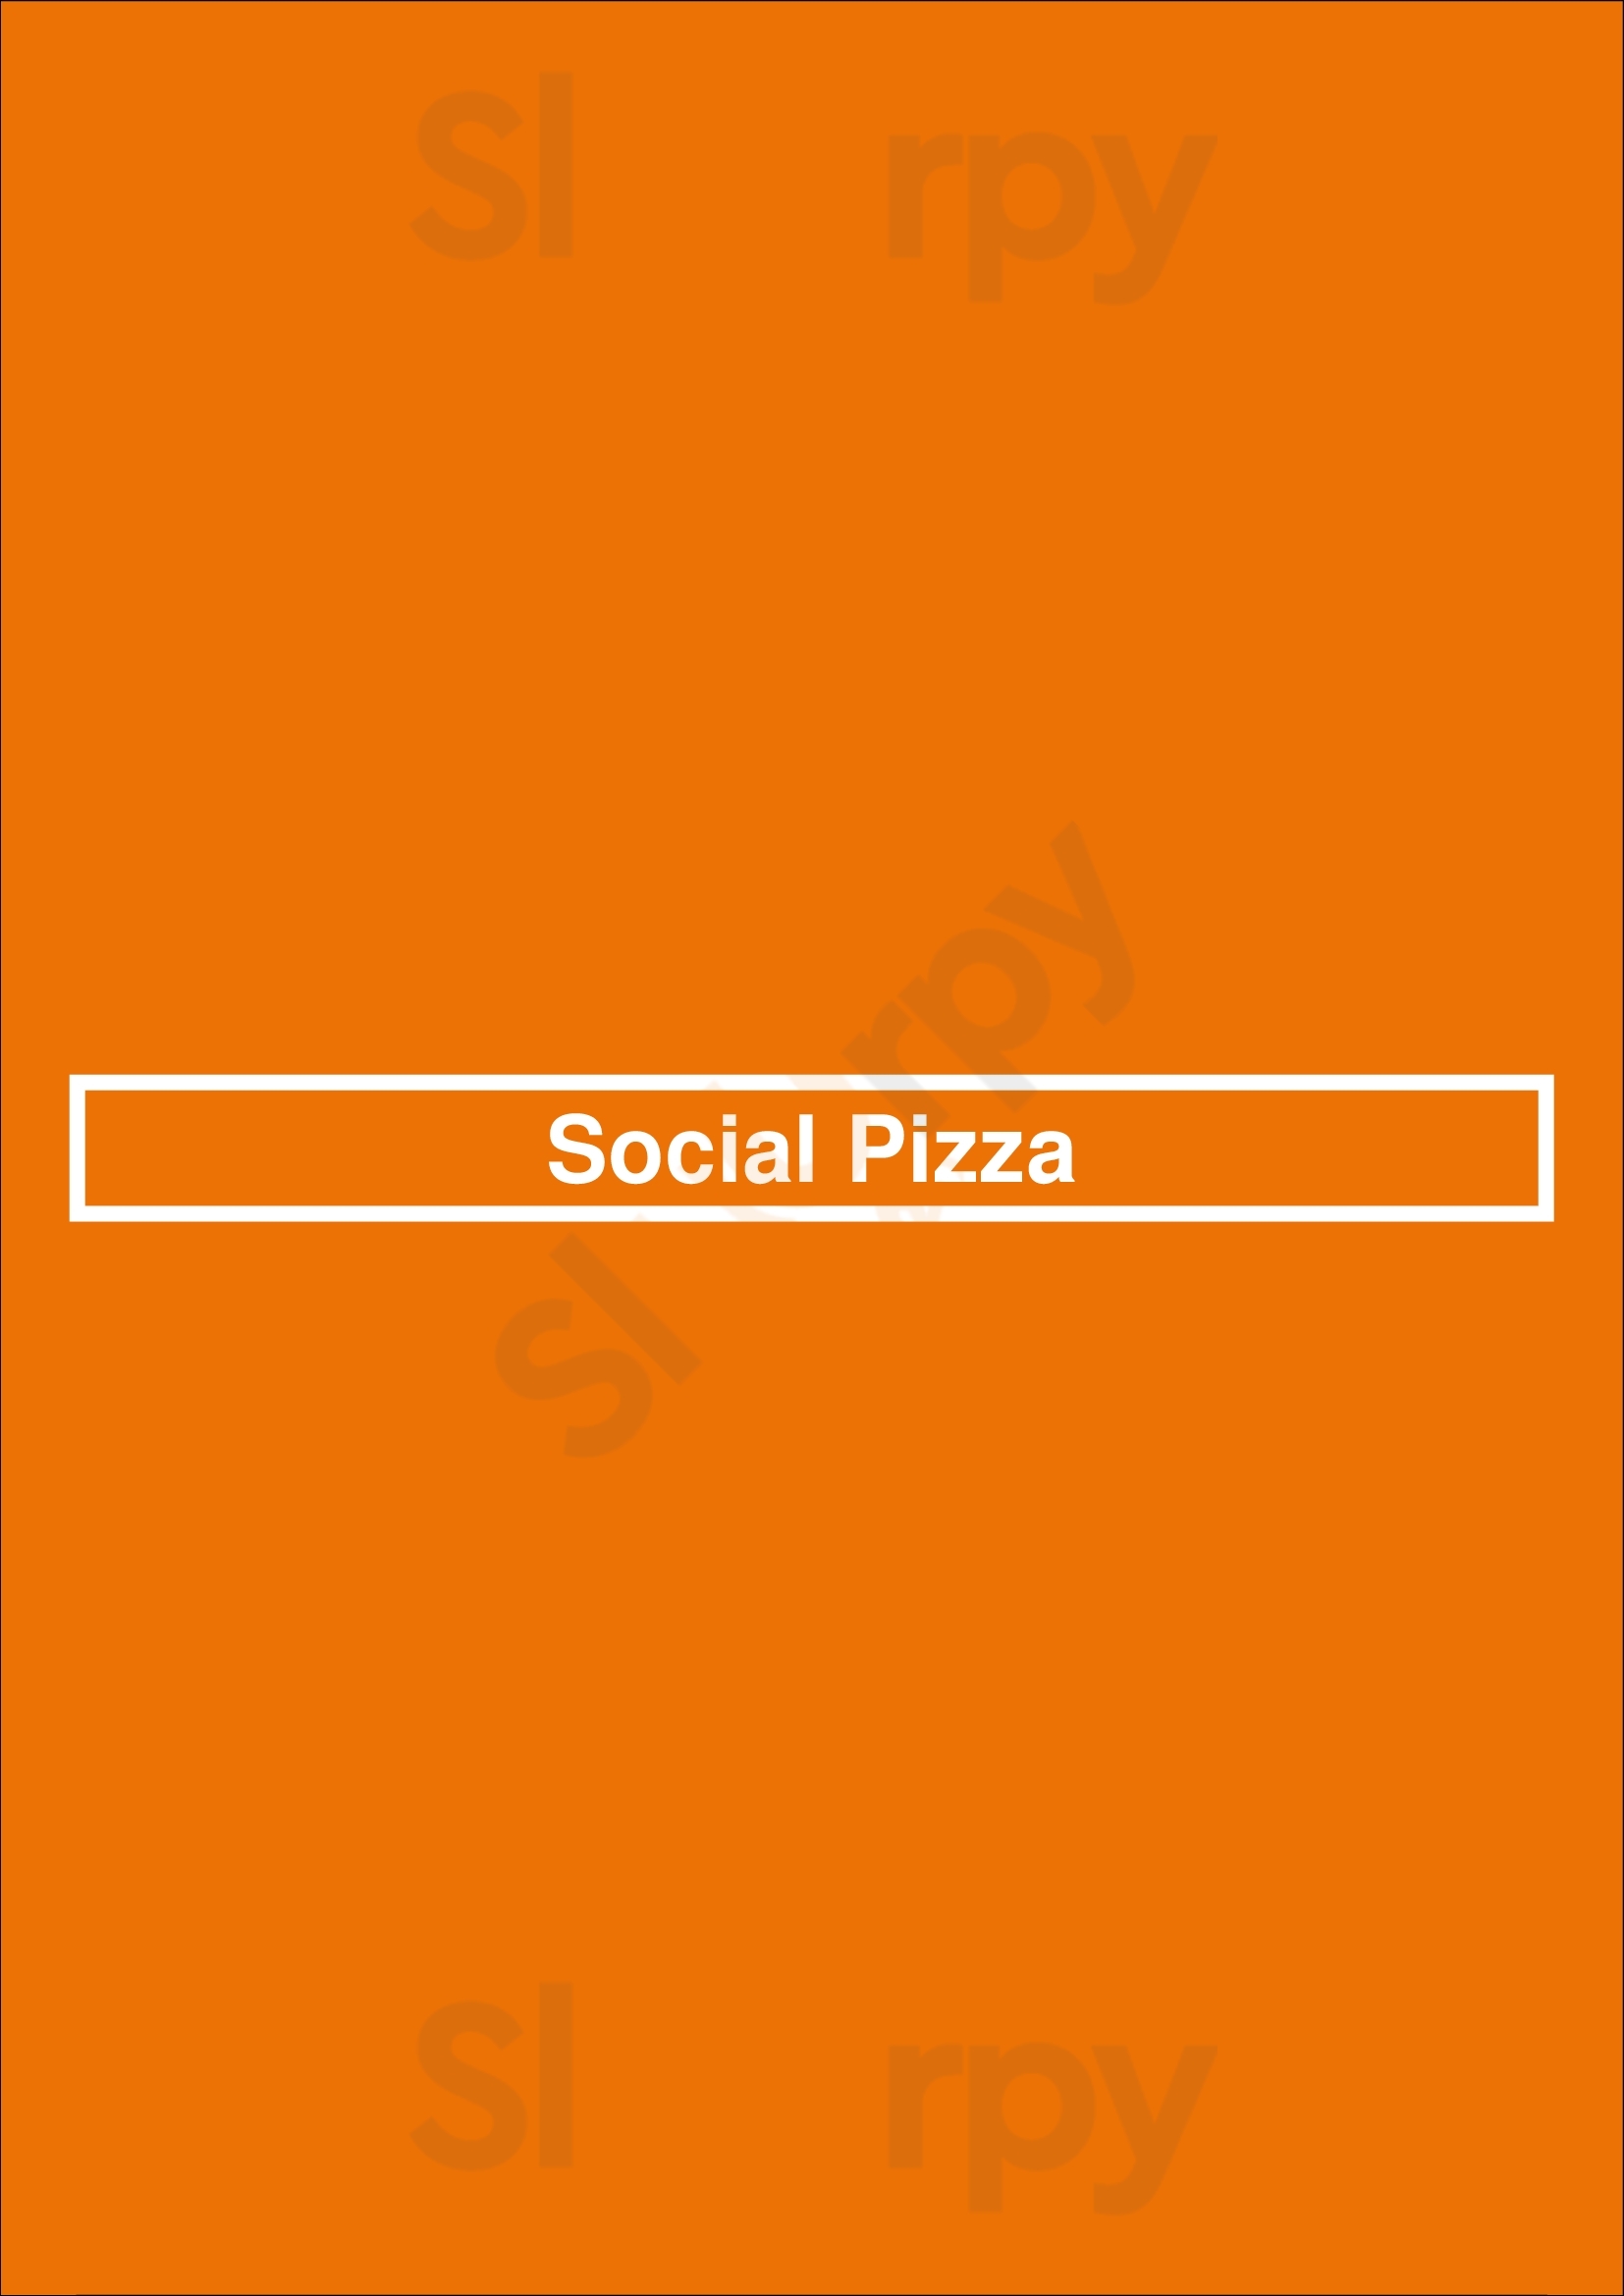 Social Pizza Buenos Aires Menu - 1